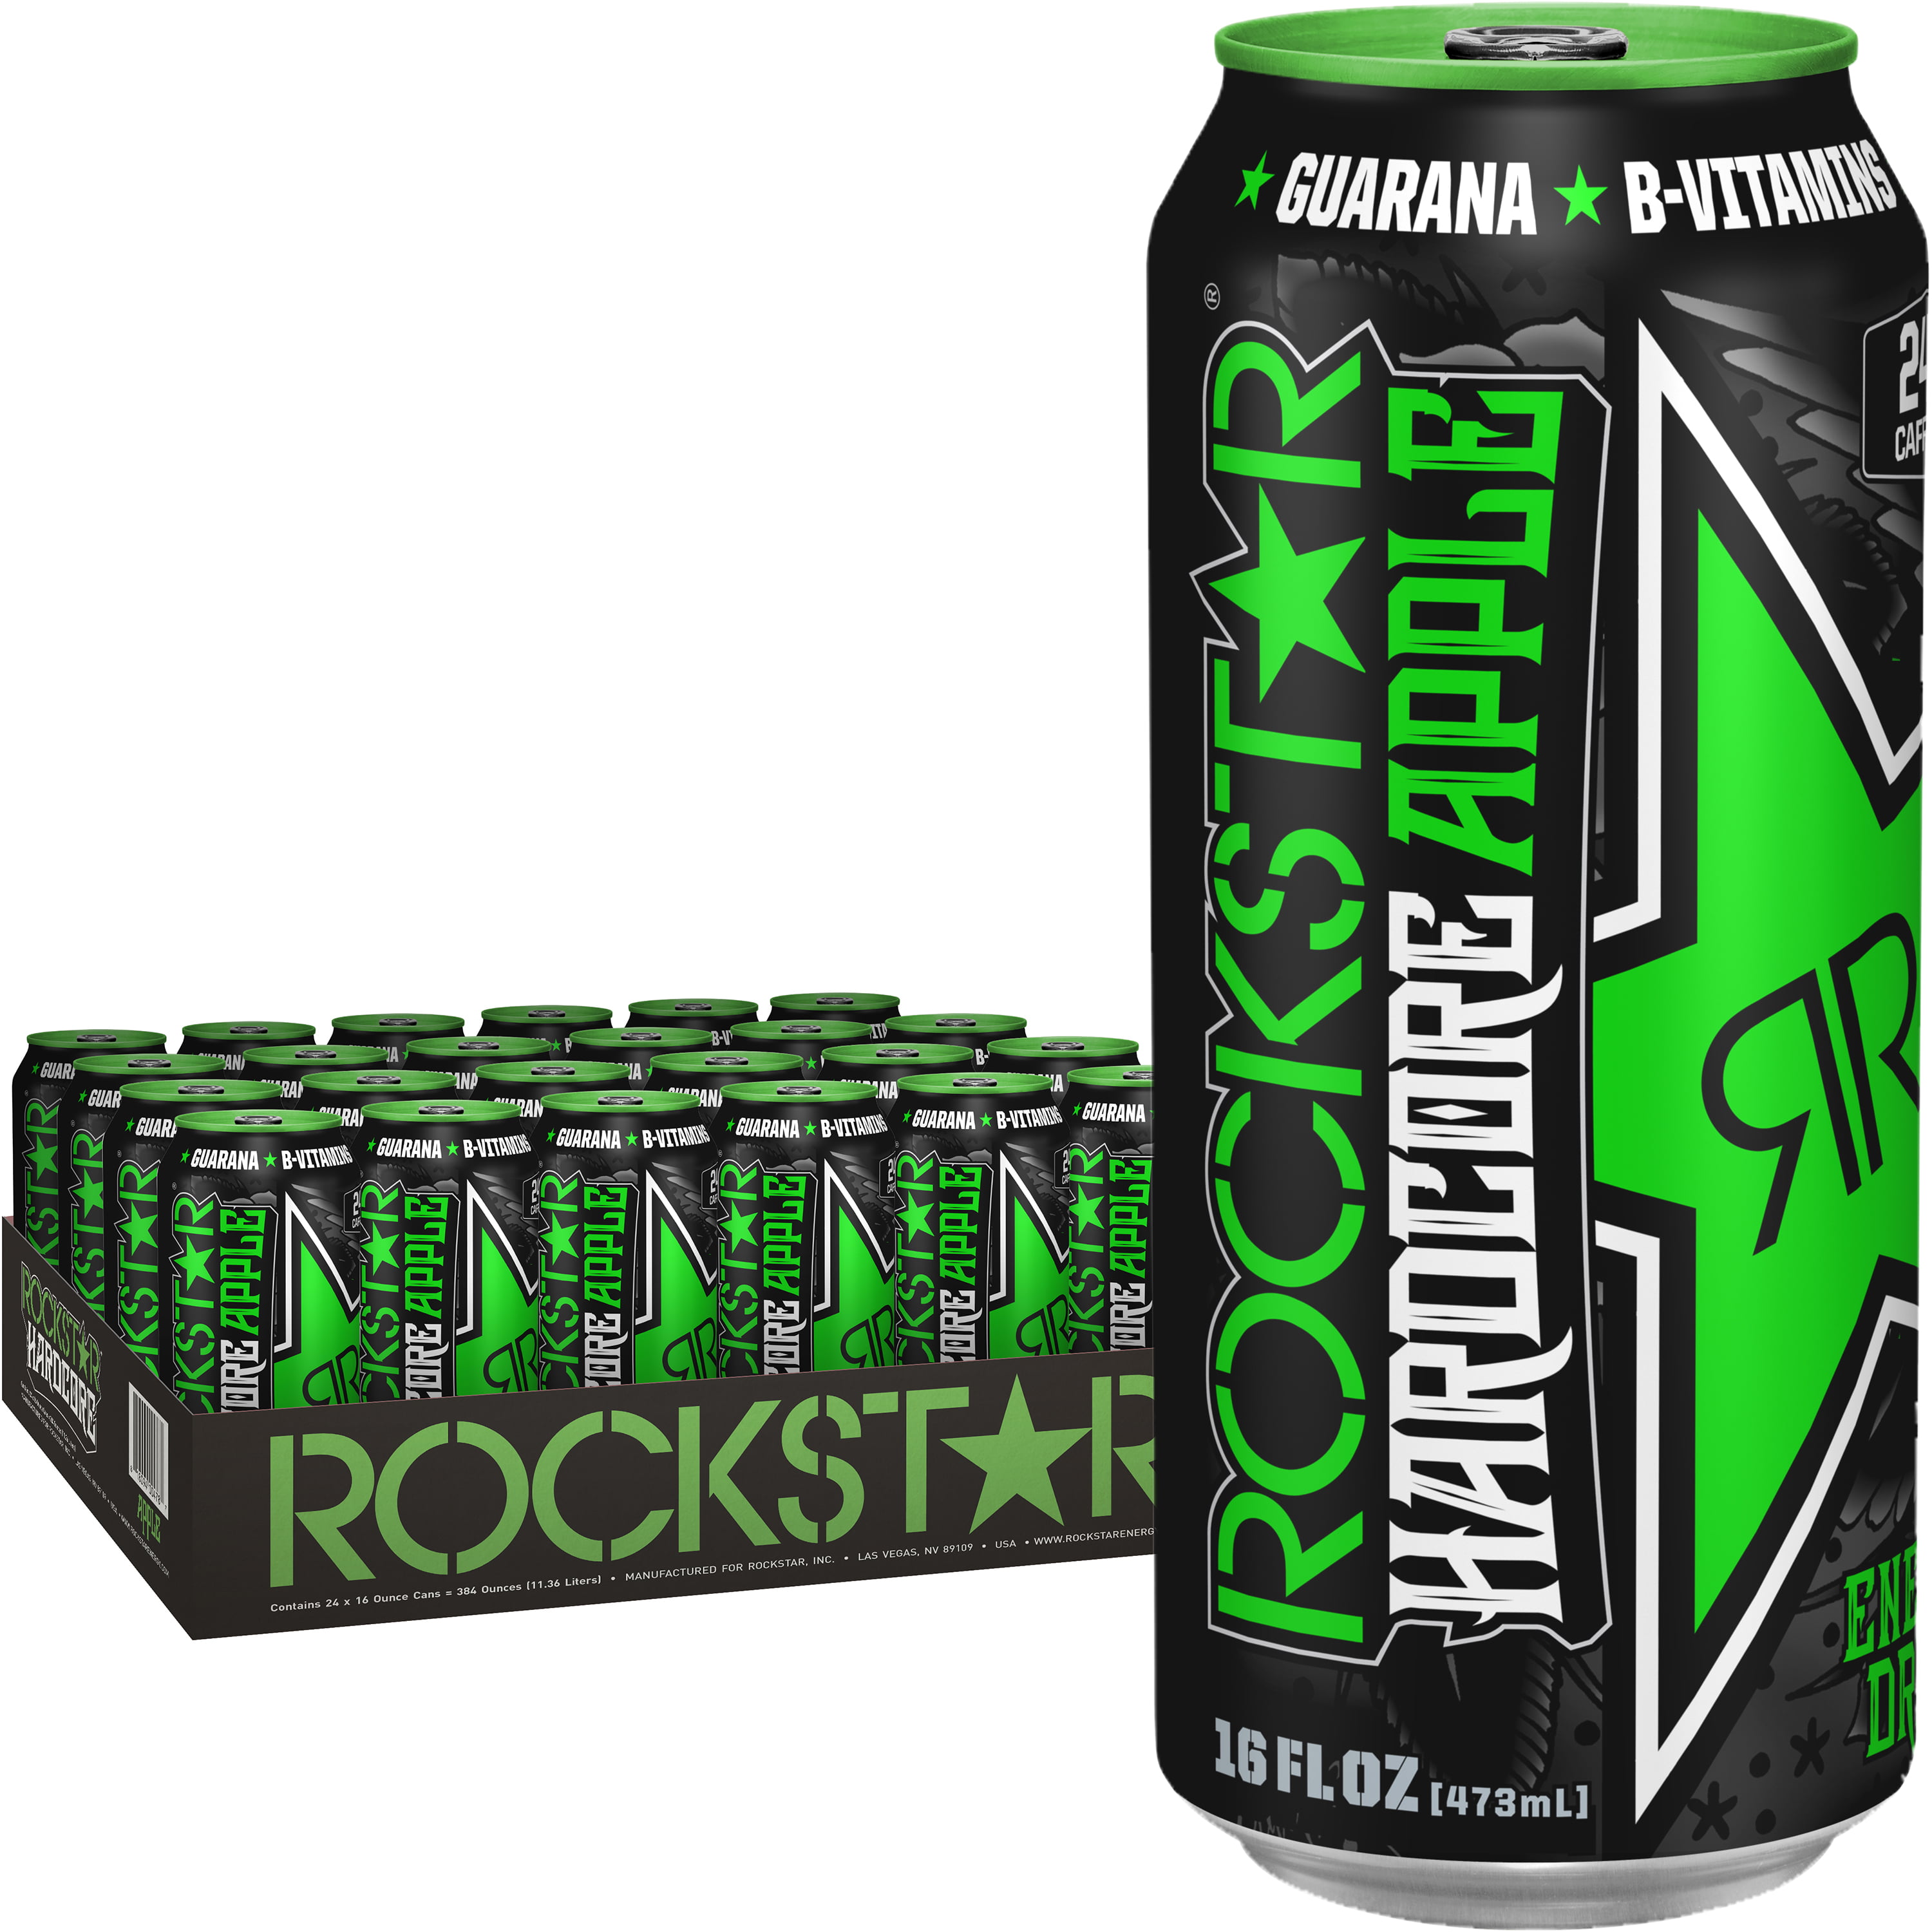 (24 Cans) Rockstar Hardcore Energy Drink, Green Apple, 16 fl oz - Walmart.com